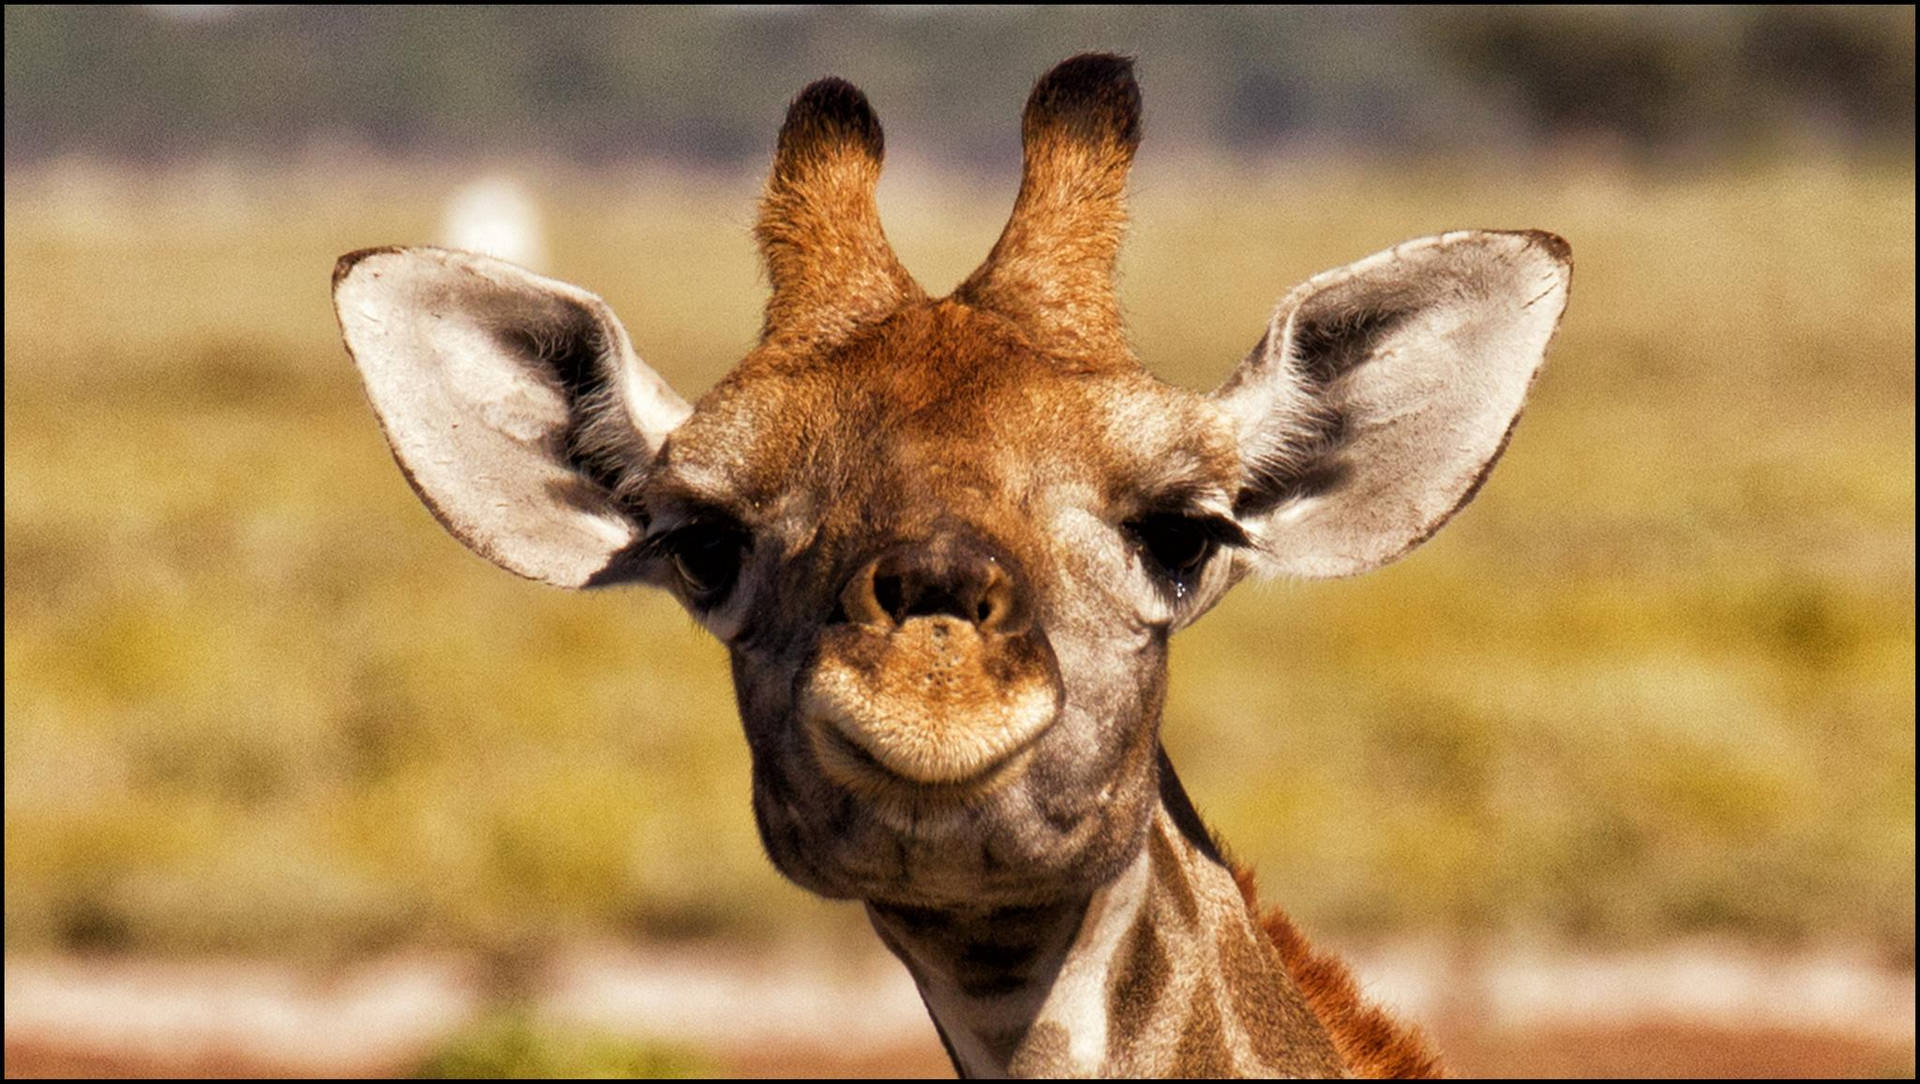 Baby Giraffe Long Ears Background